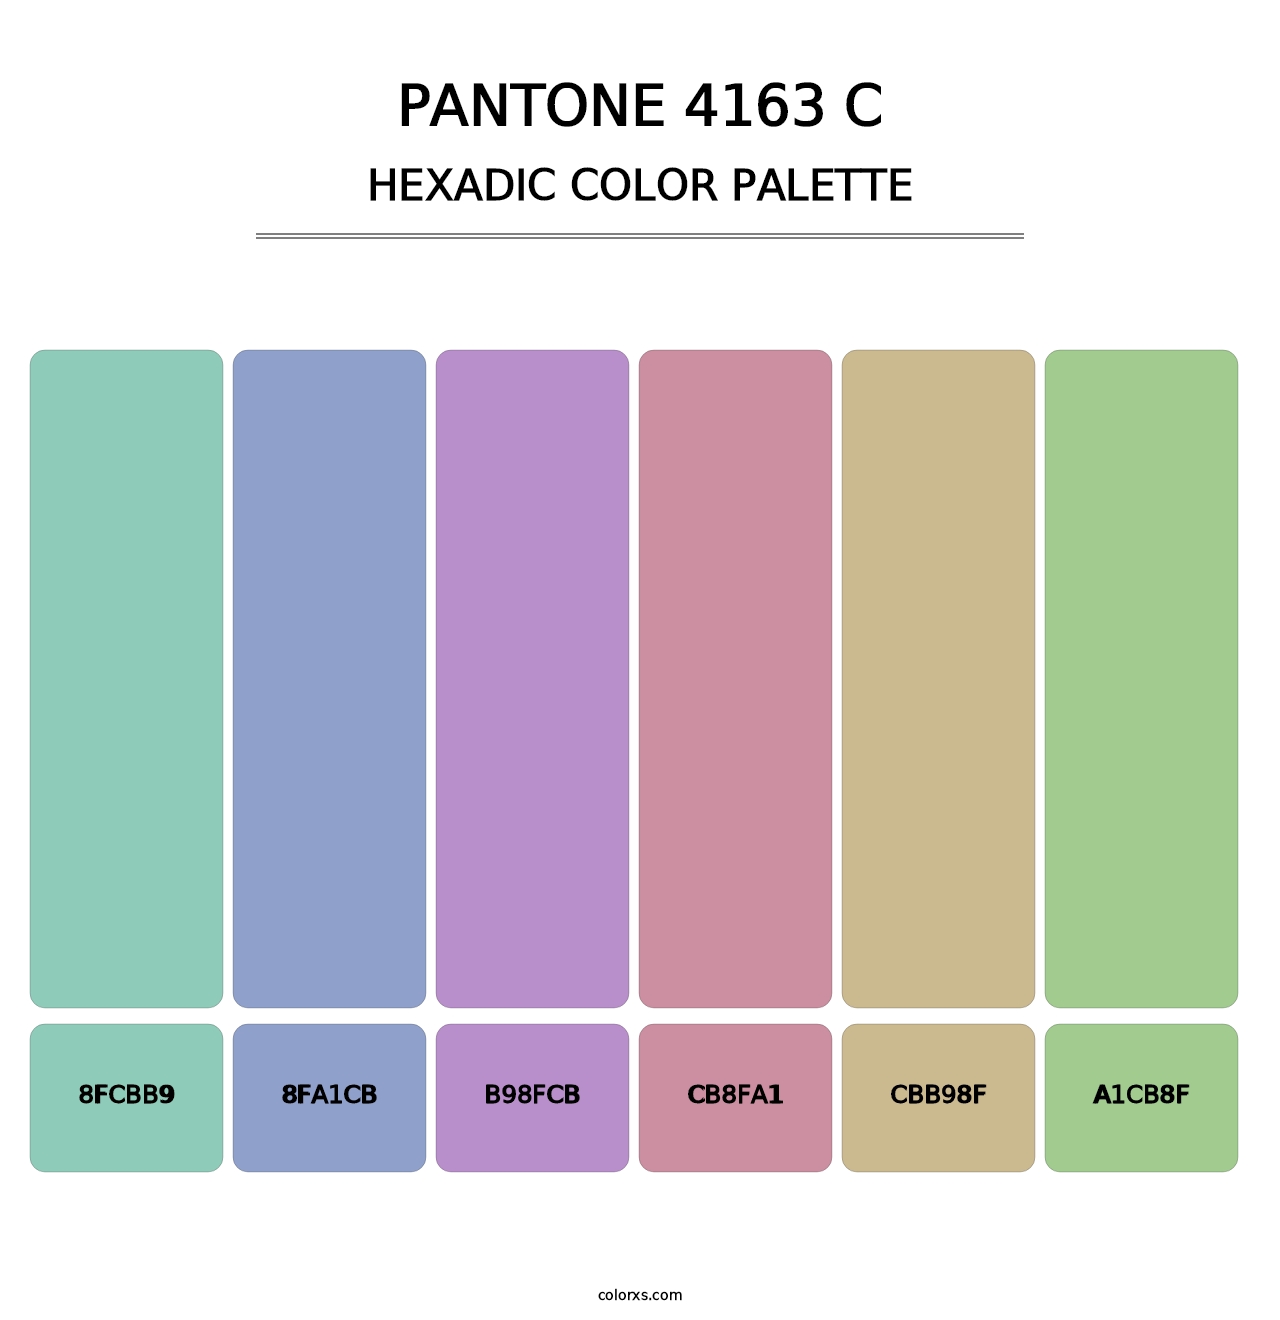 PANTONE 4163 C - Hexadic Color Palette